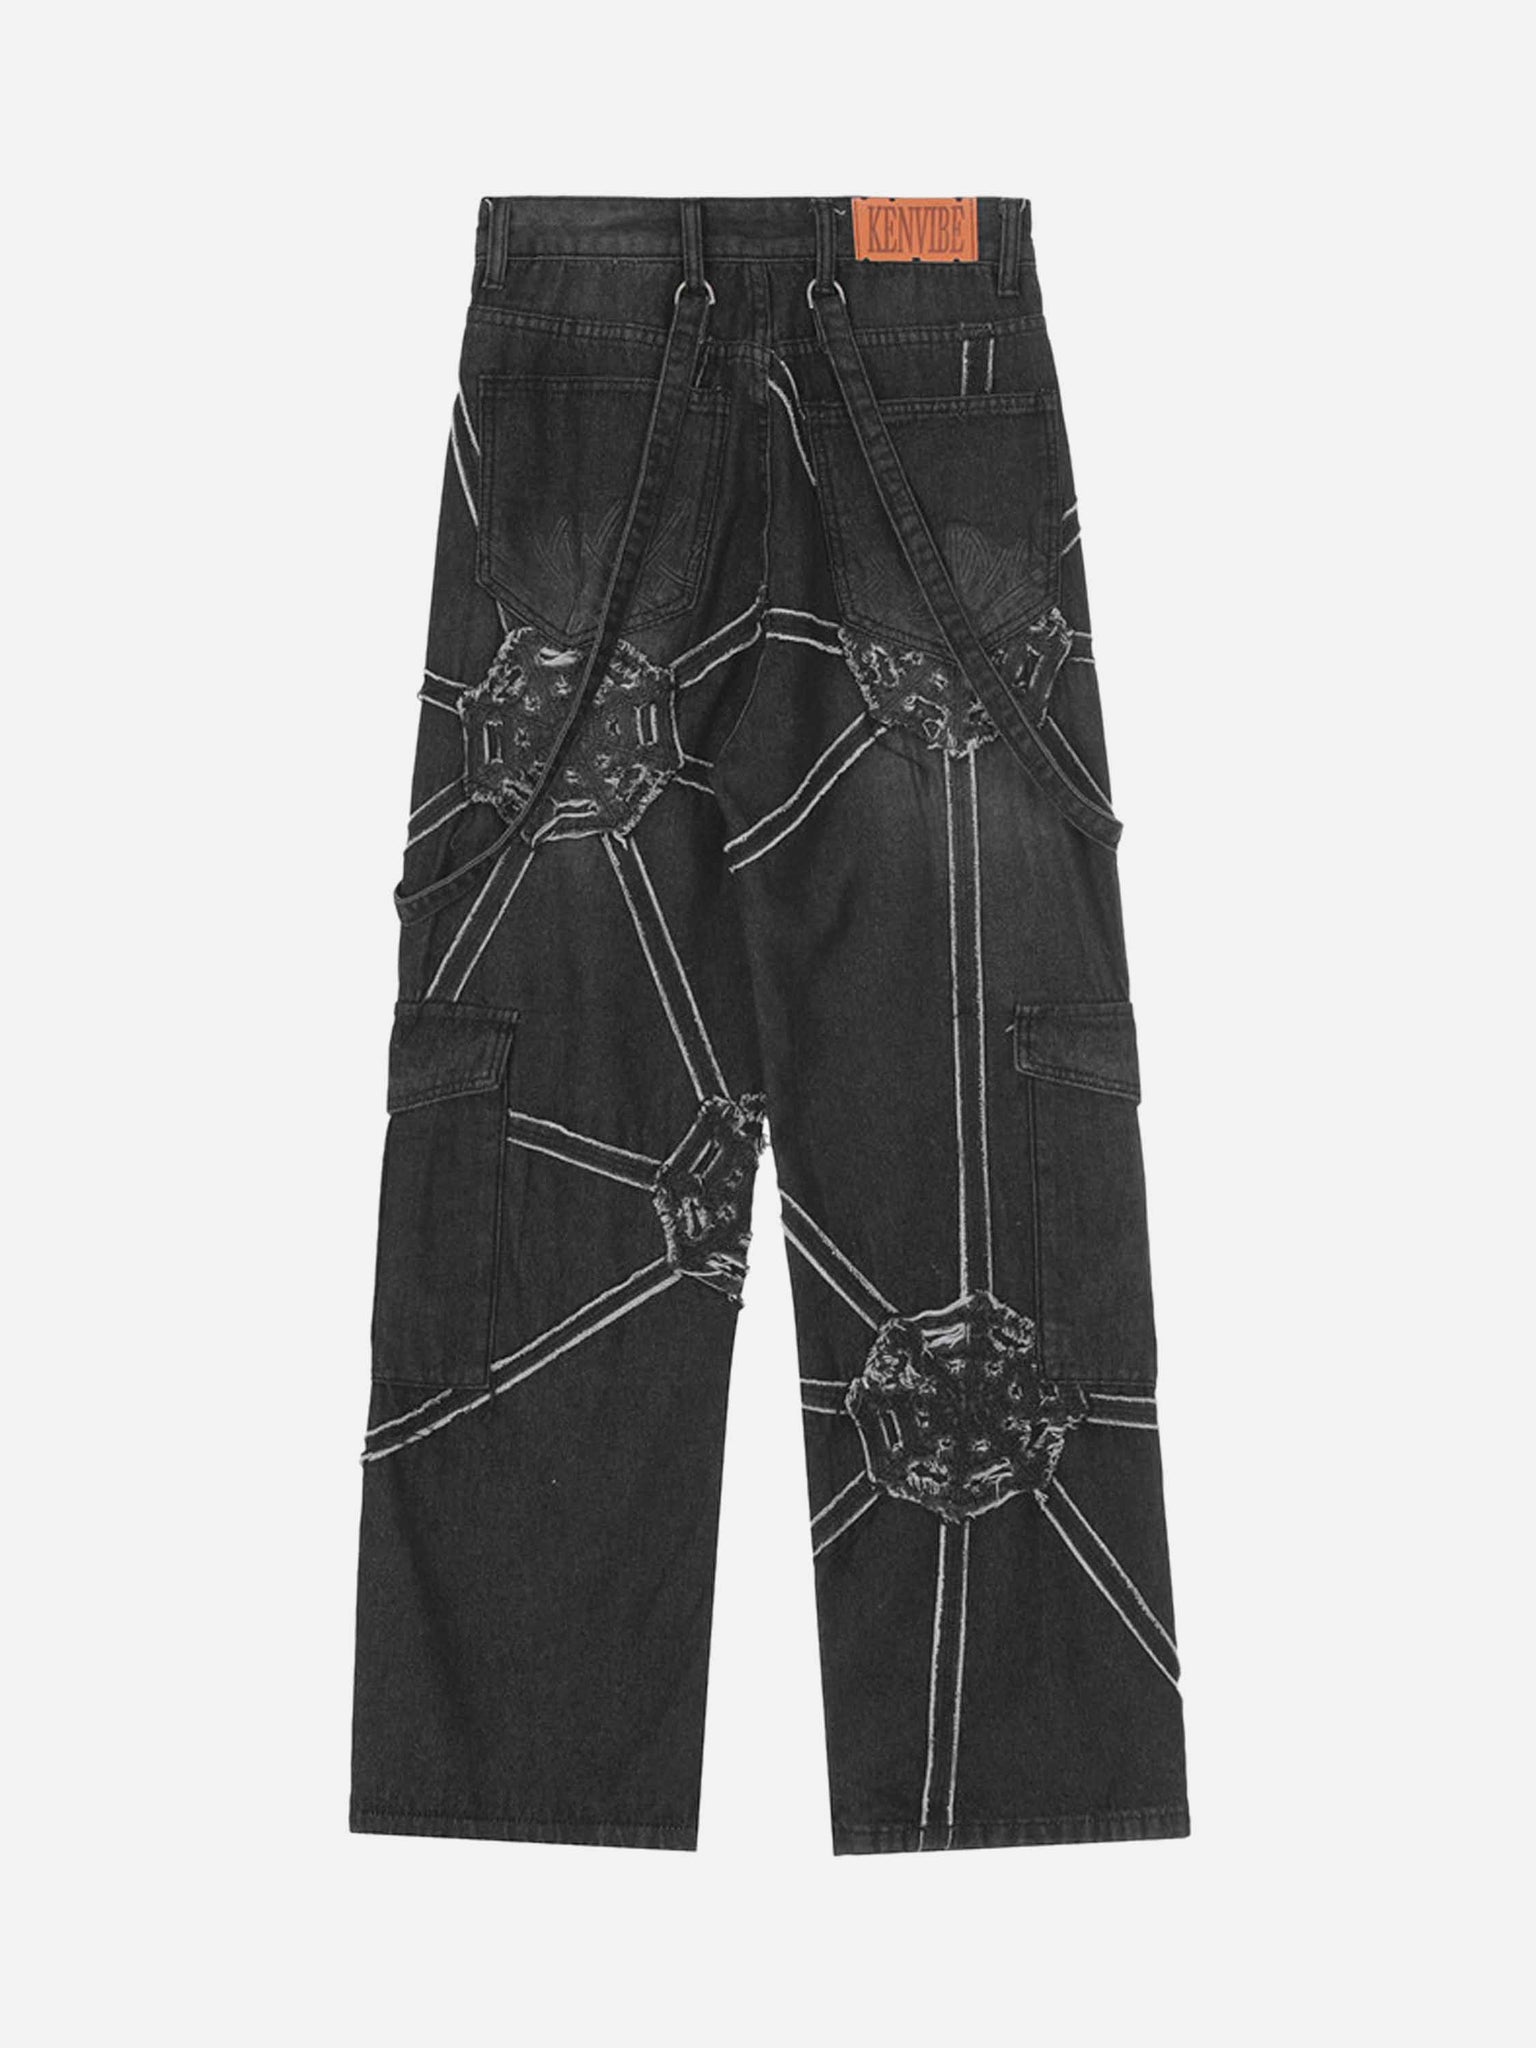 The Supermade Hip-hop High Street Design Sense Spider Web Denim Straight Leg Pants-1512